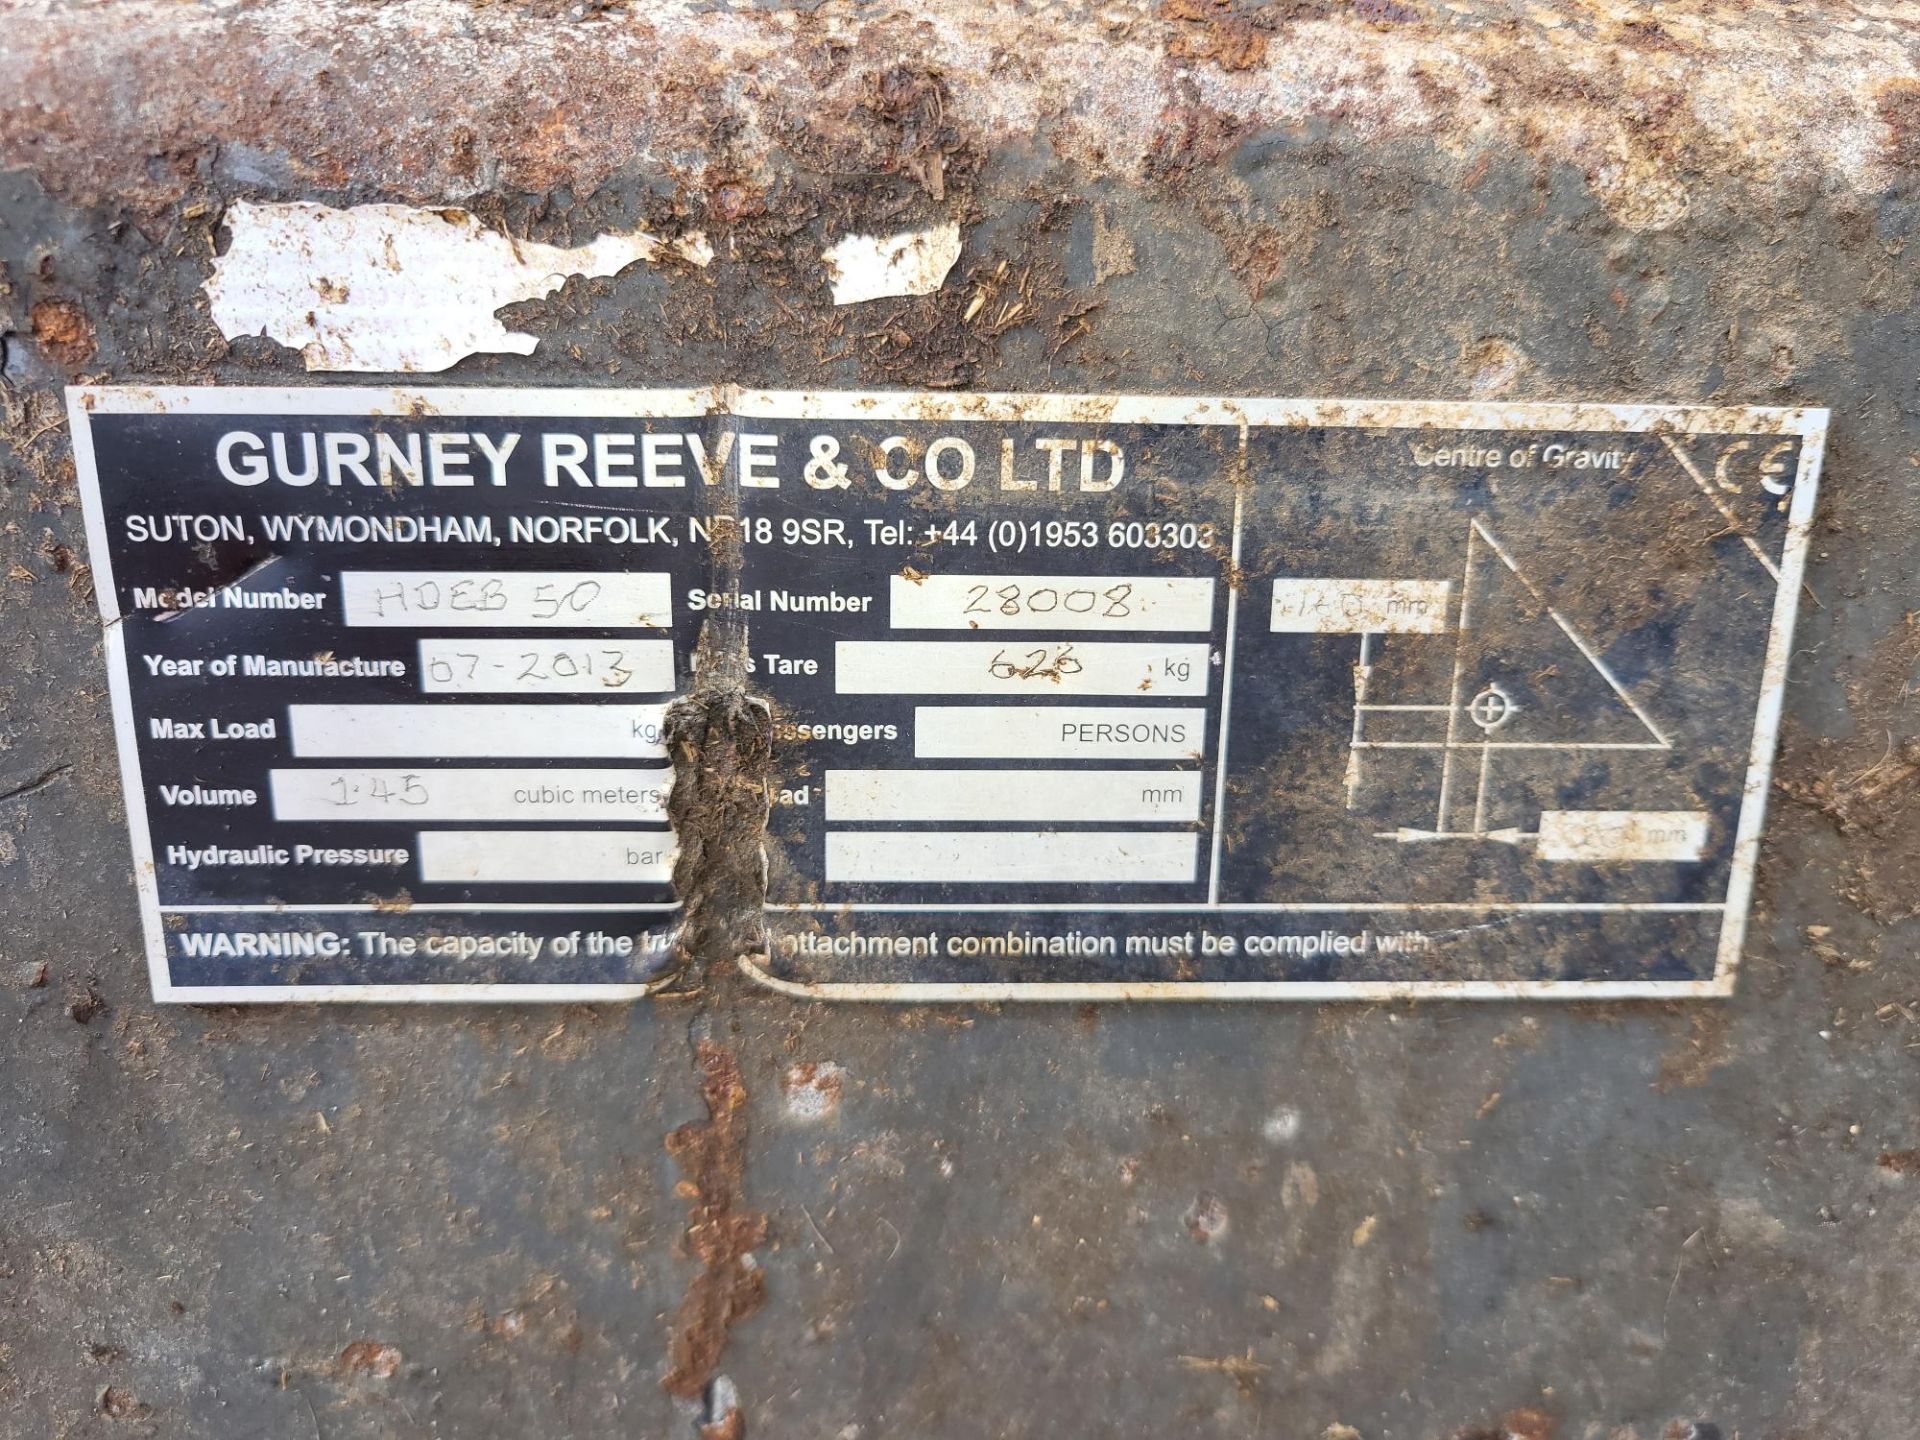 1, Gurney Reeve & Co Ltd HDBE50 1.45m3 (2.3m) Bucket (2013)(Damaged) - Image 3 of 3